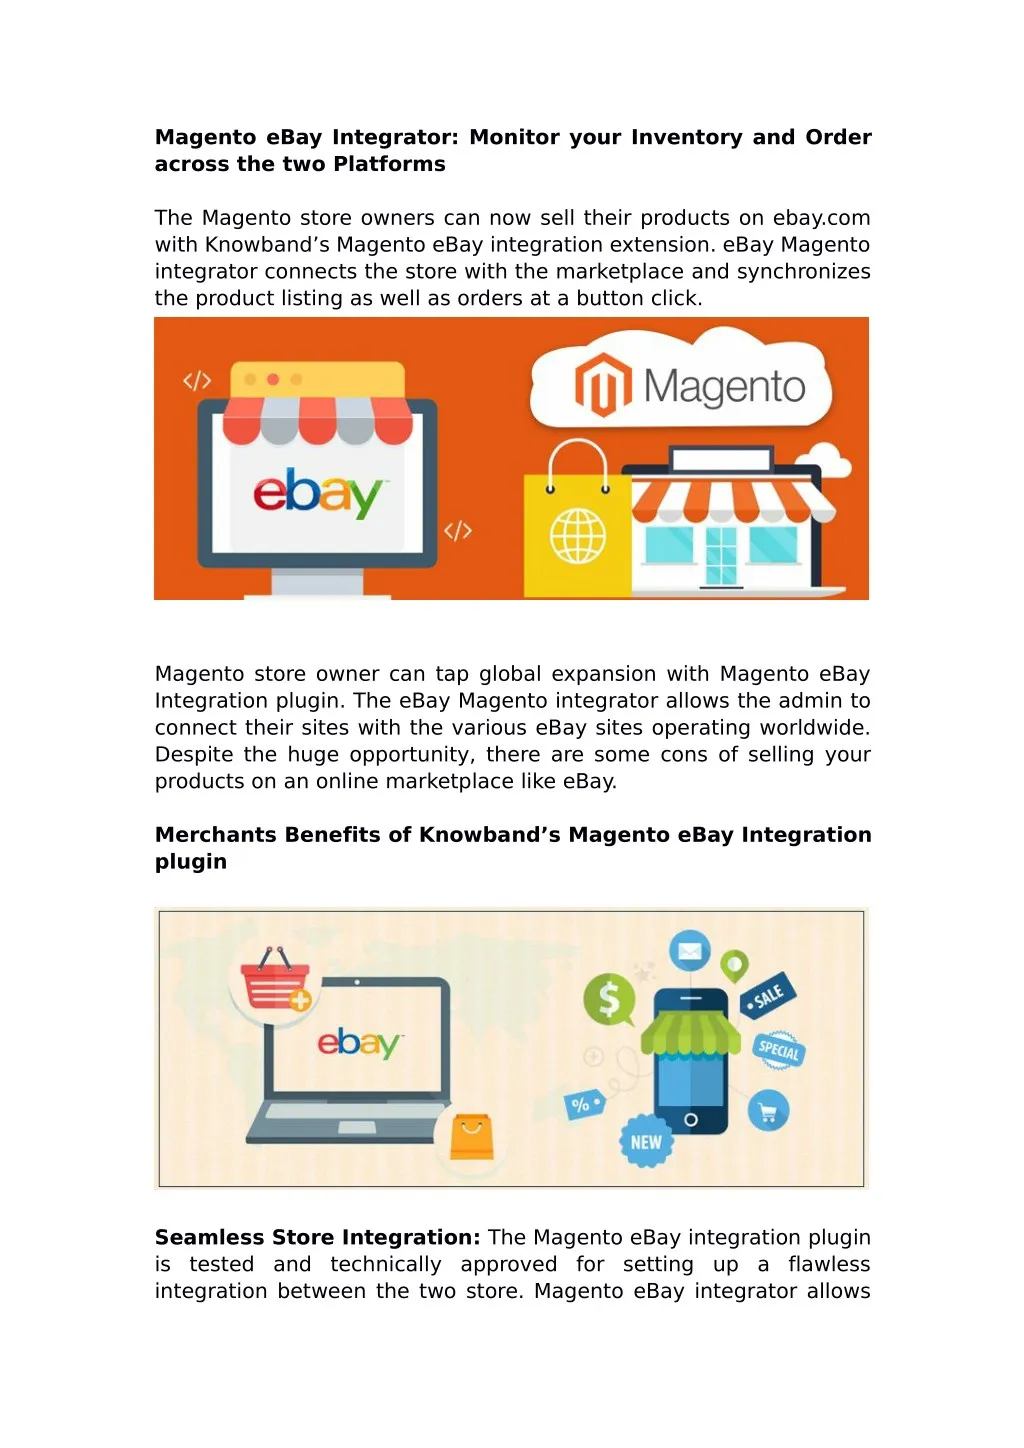 magento ebay integrator monitor your inventory